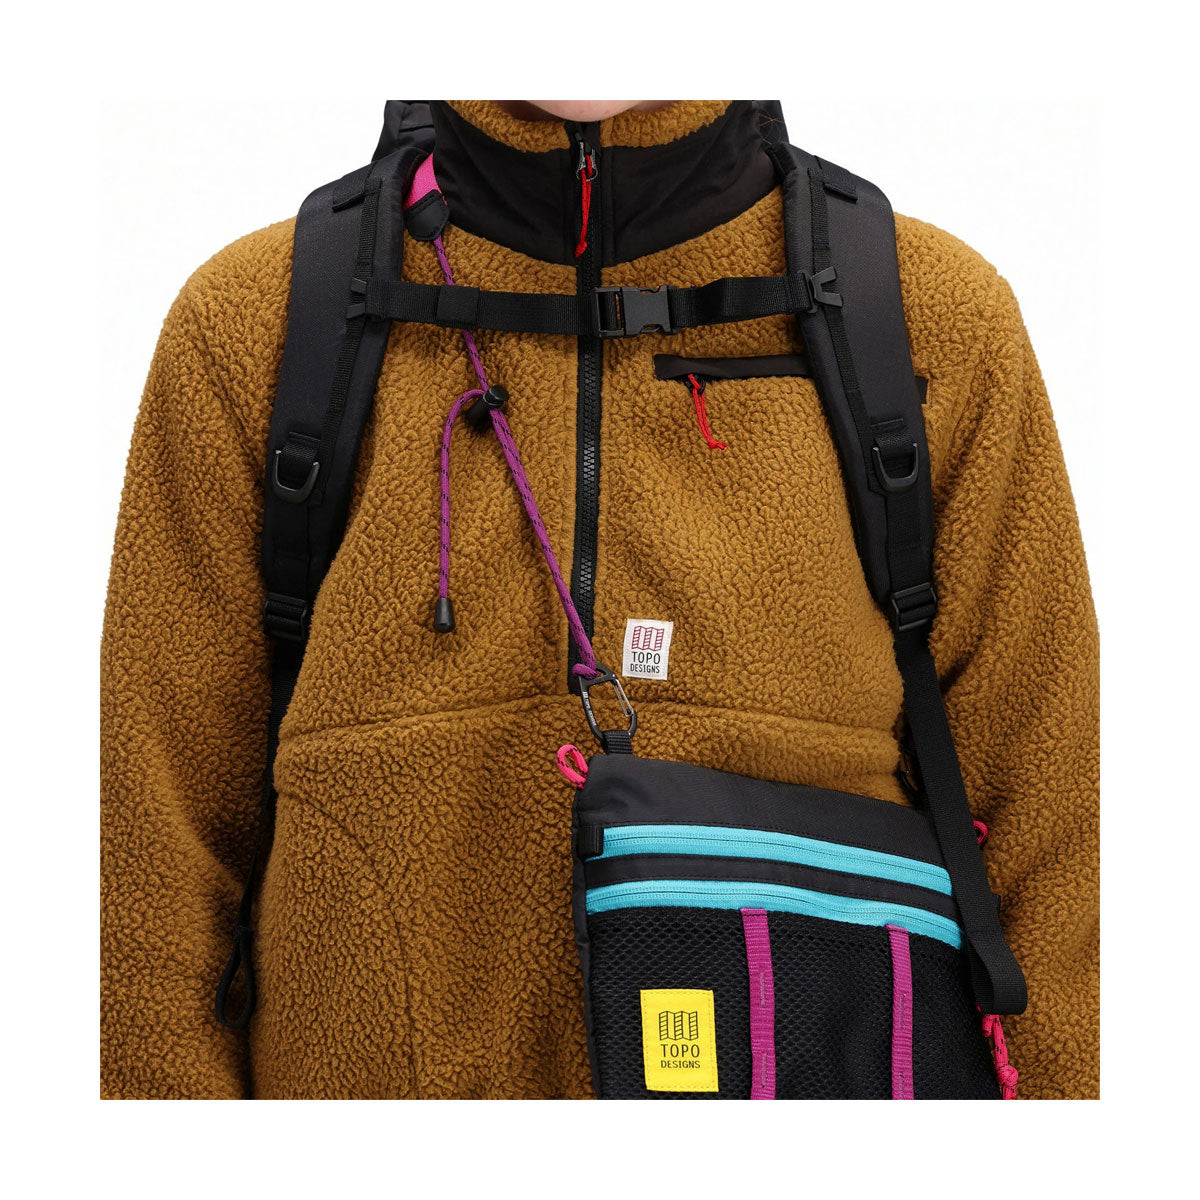 Topo Designs : Mountain Accessory Shoulder Bag : Loganberry/Bone White